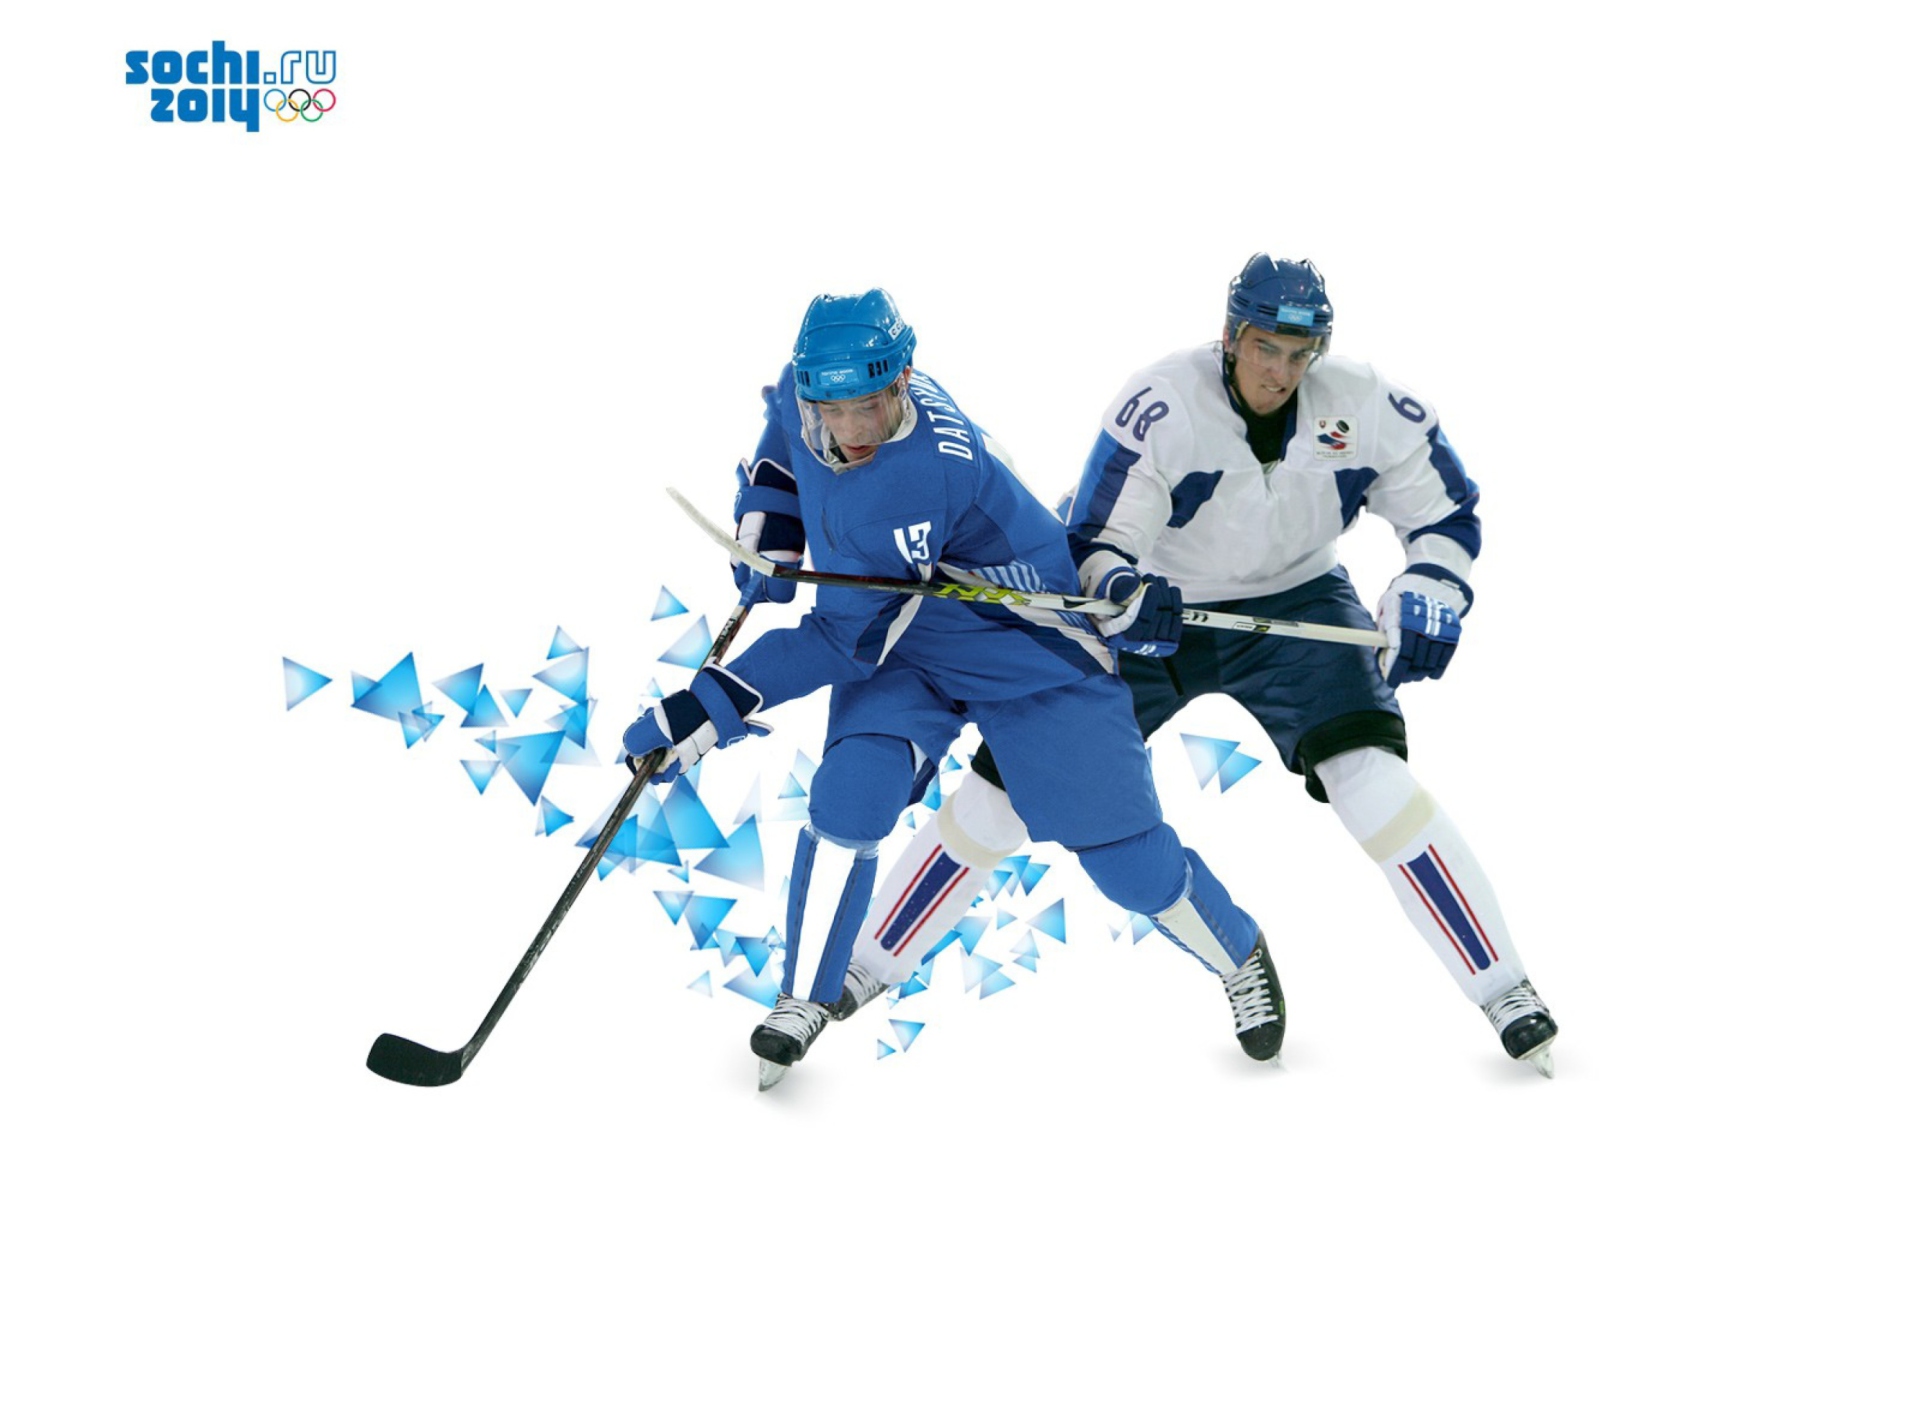 Das Sochi 2014 Hockey Wallpaper 1920x1408